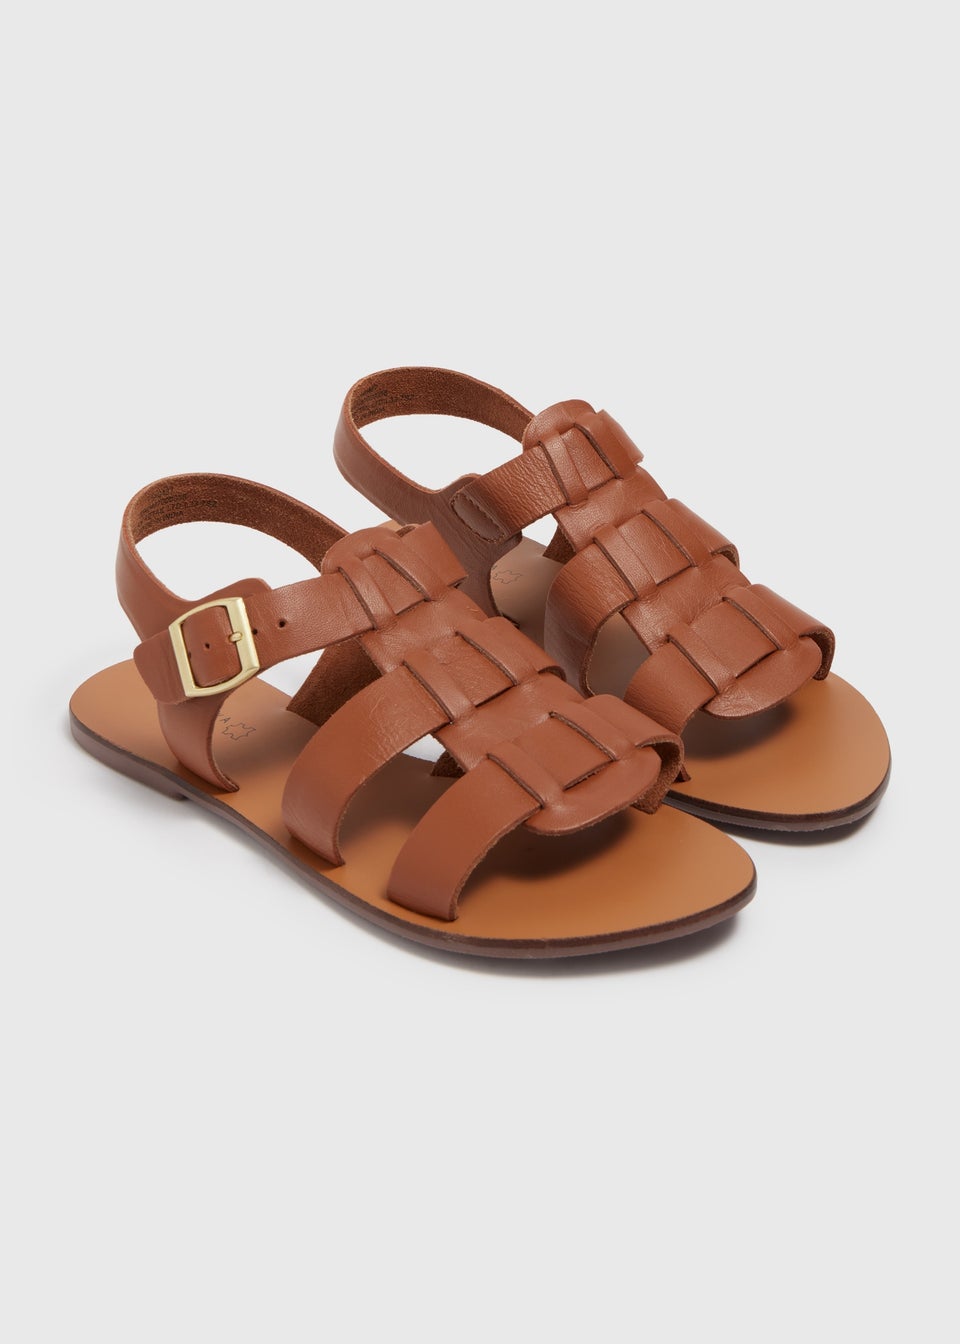 Tan Gladiator Leather Sandals